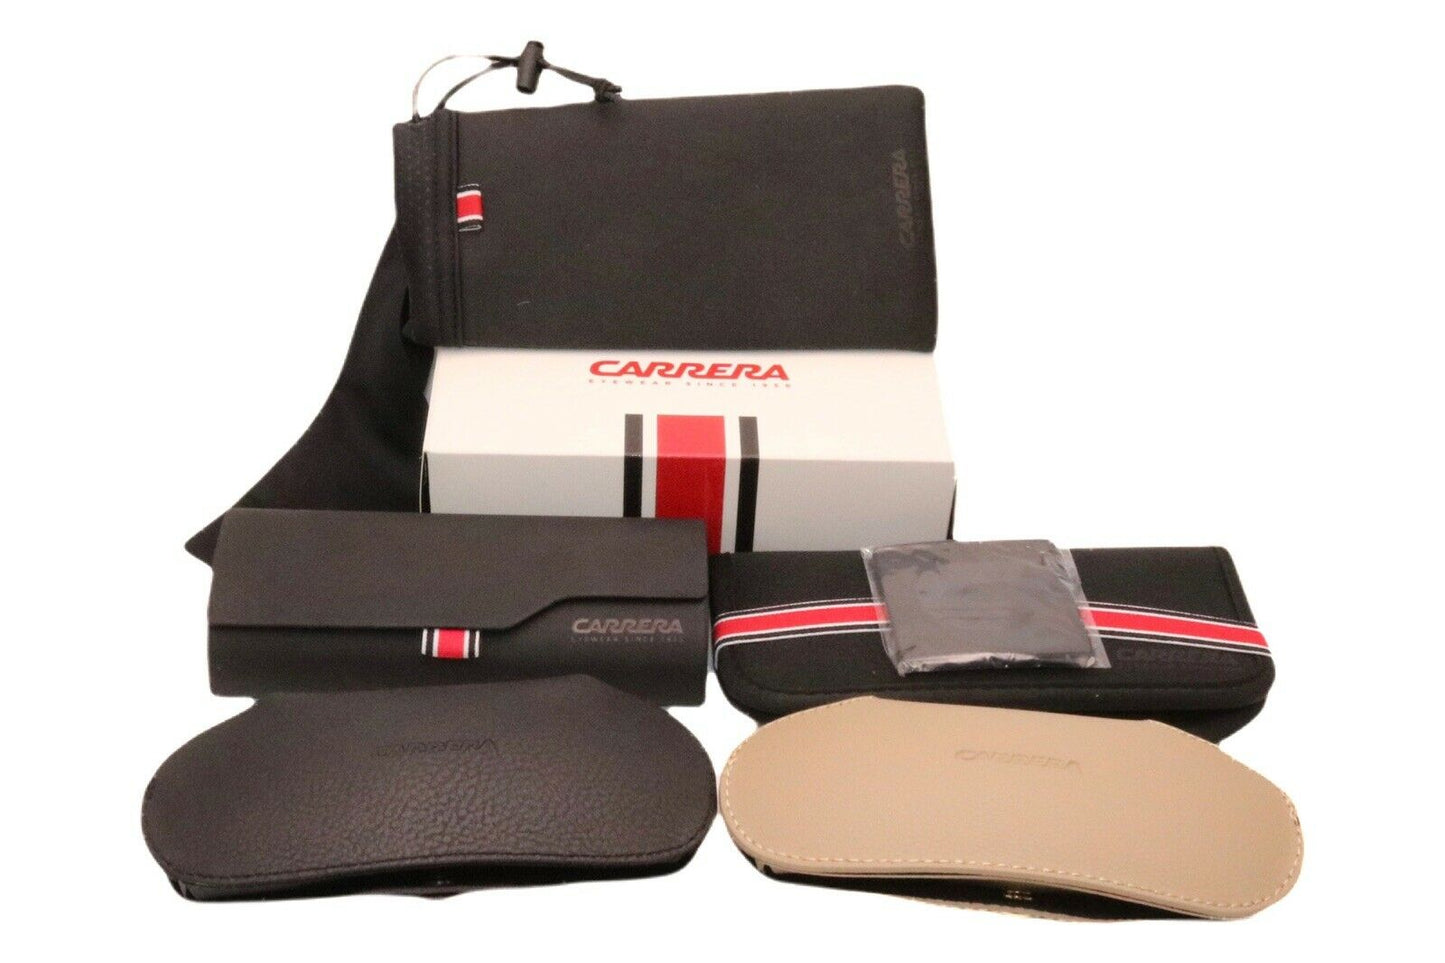 Carrera HOT65-0086 HA 64mm New Sunglasses